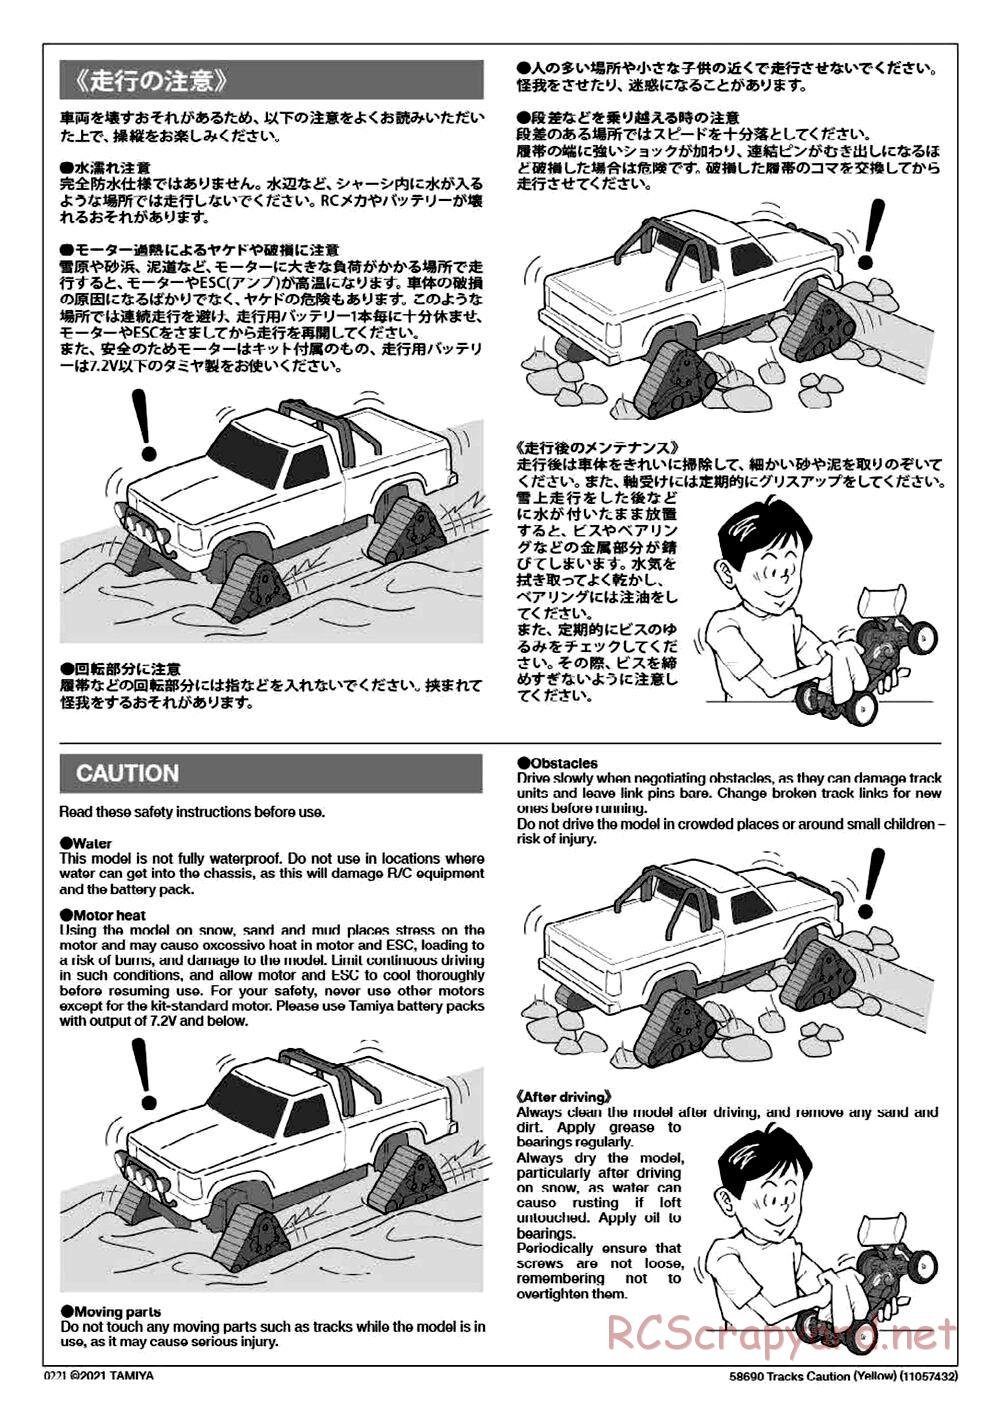 Tamiya - Landfreeder Quadtrack - TT-02FT Chassis - Manual - Page 33